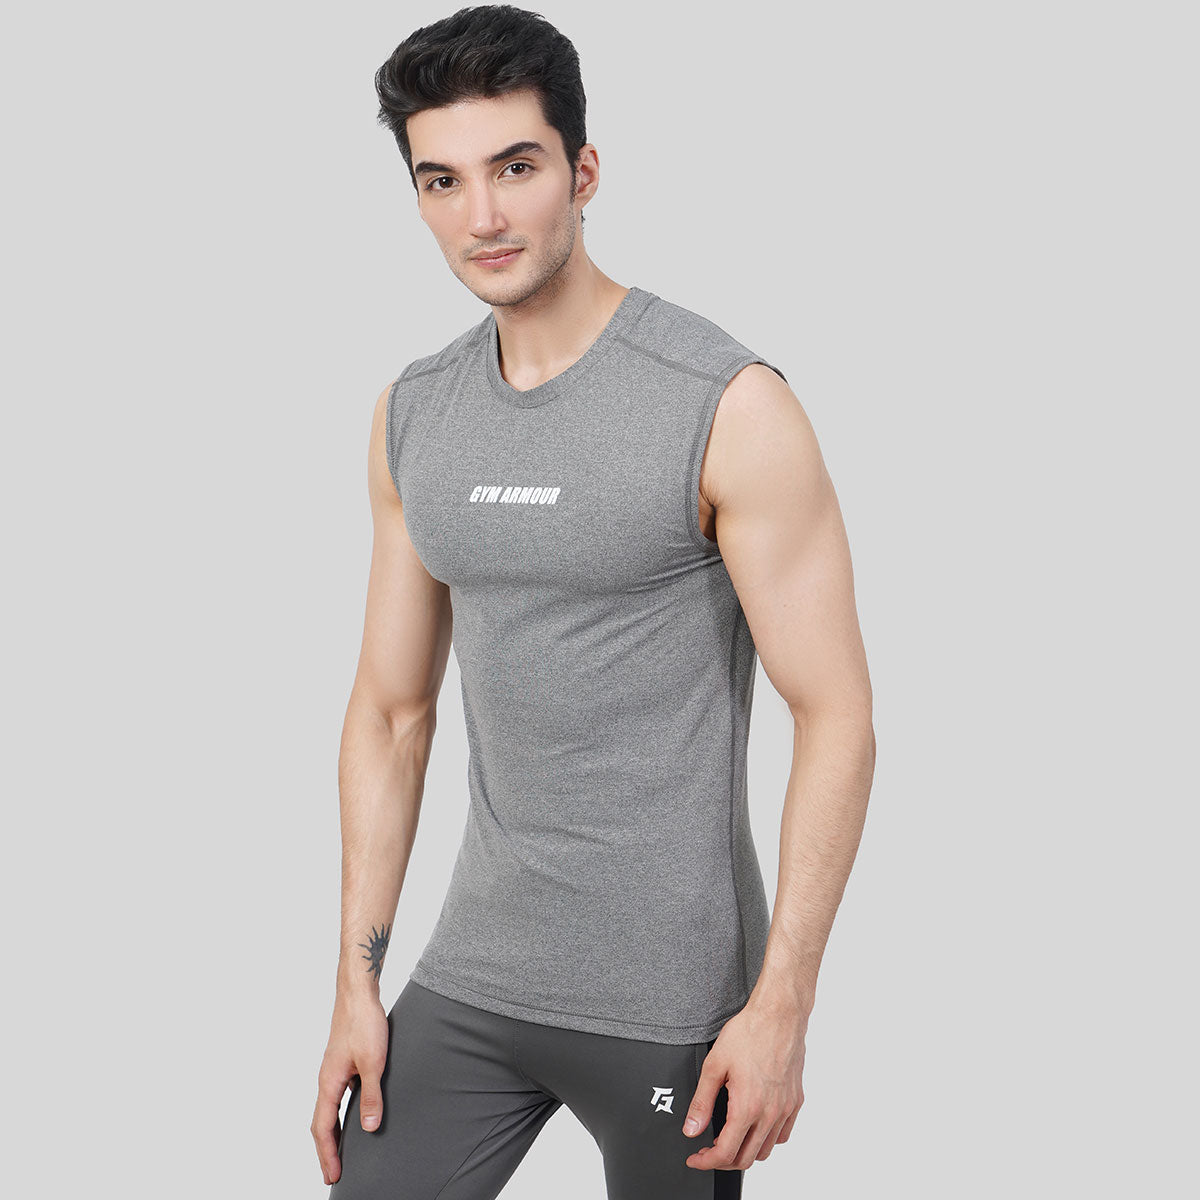 Iconic Compression Shirt (Grey)